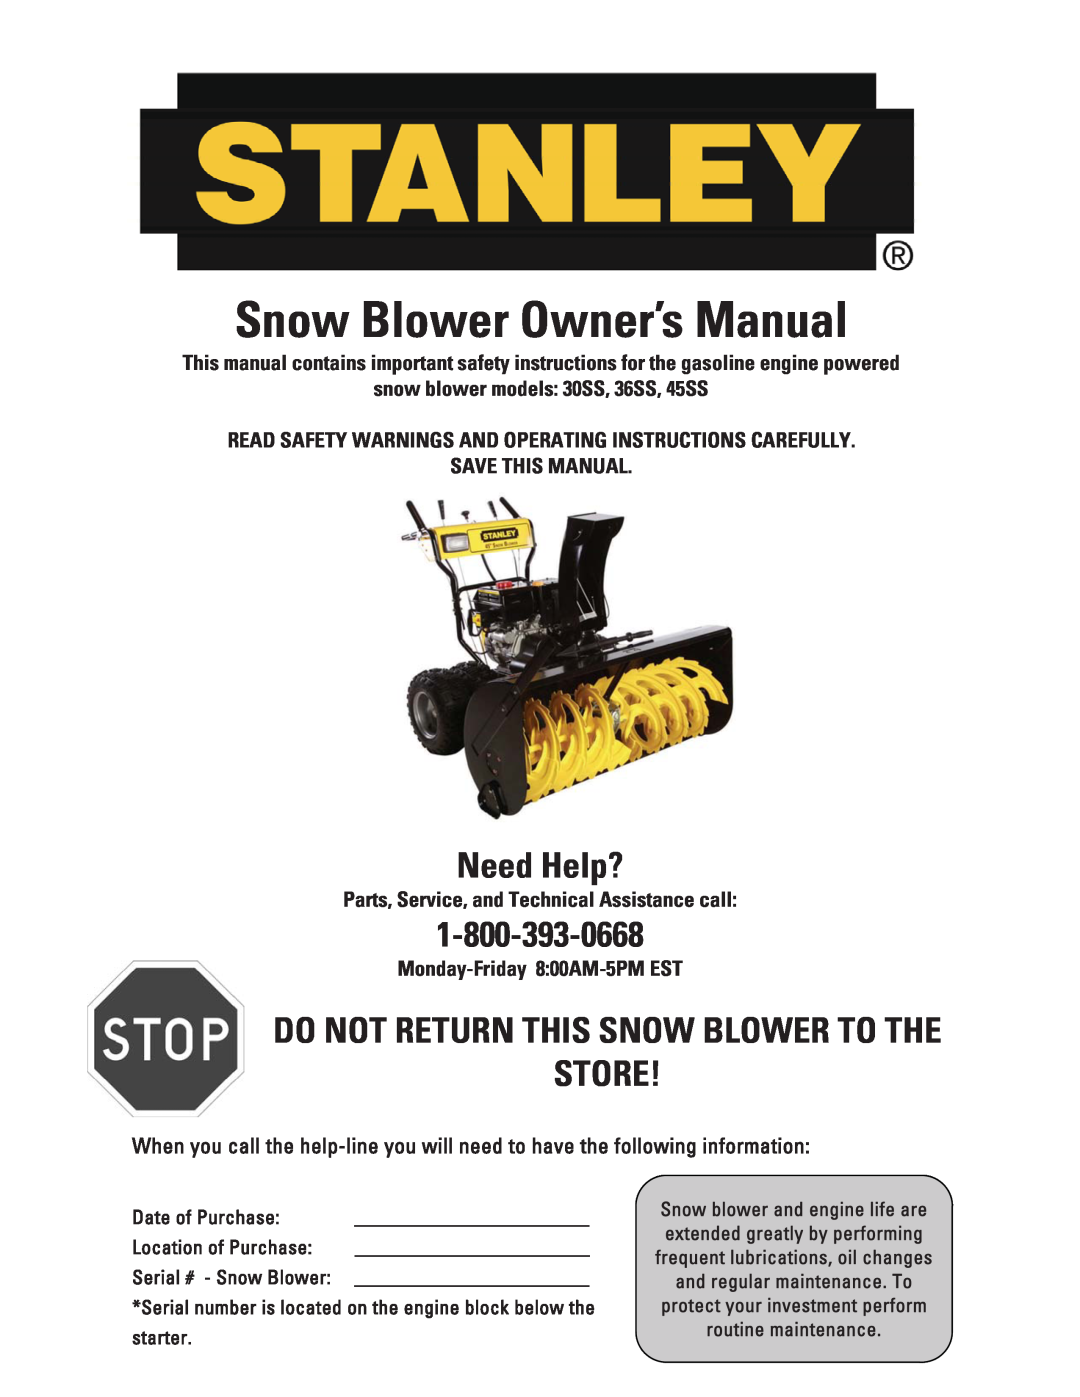 Stanley Black & Decker owner manual Snow Blower Owner’s Manual, Need Help?, snow blower models 30SS, 36SS, 45SS 